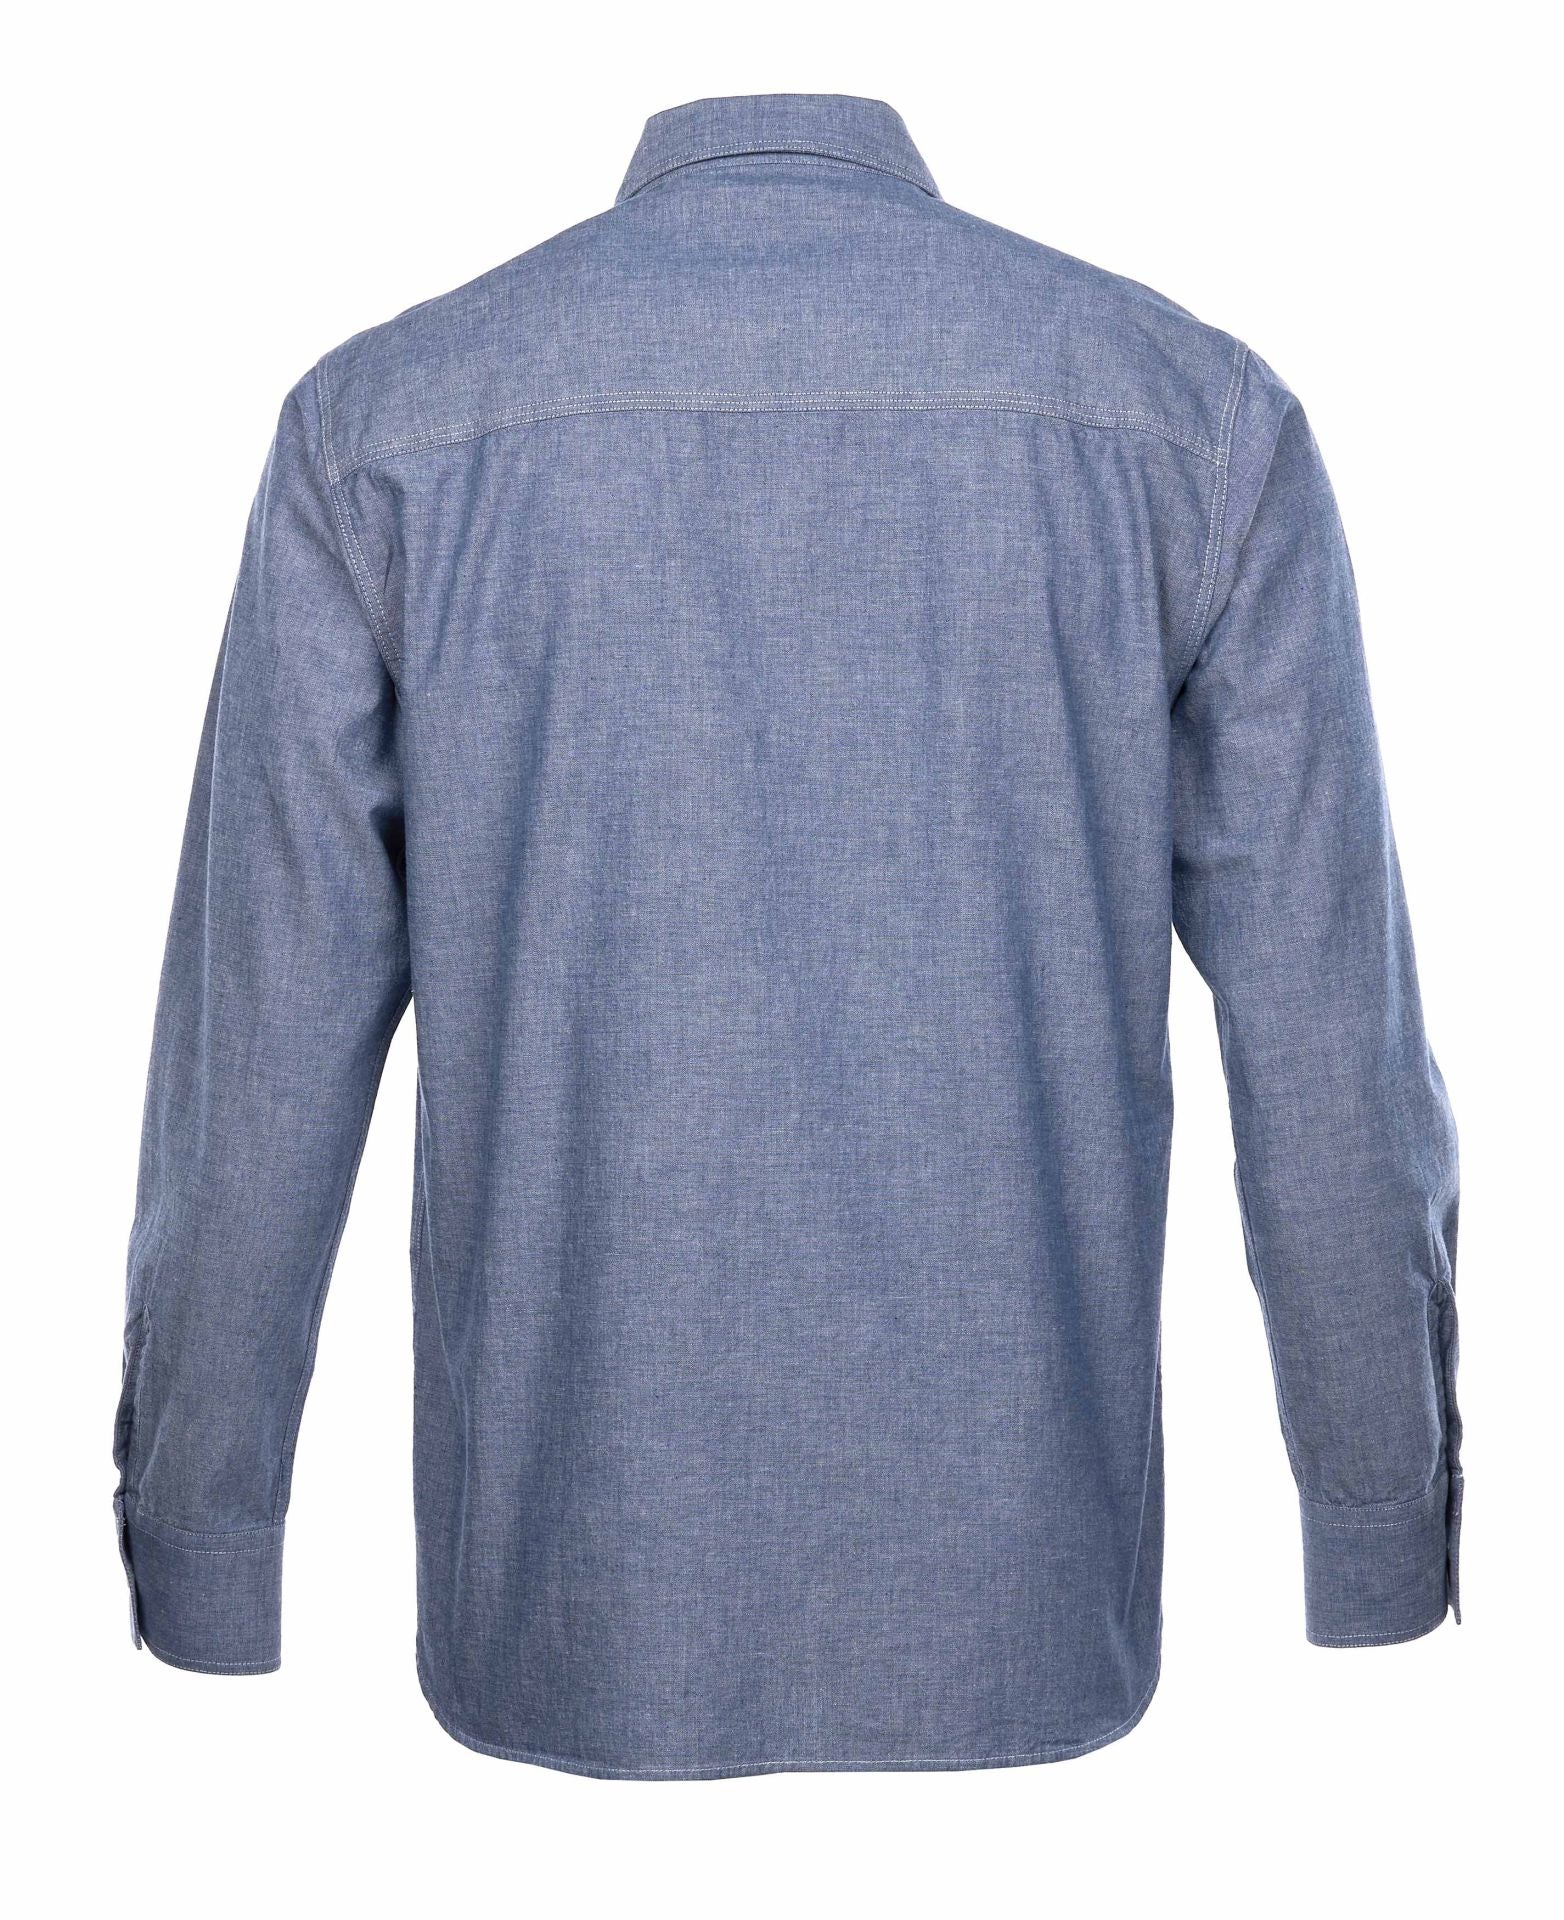 1937 Roamer Shirt - Blue Chambray